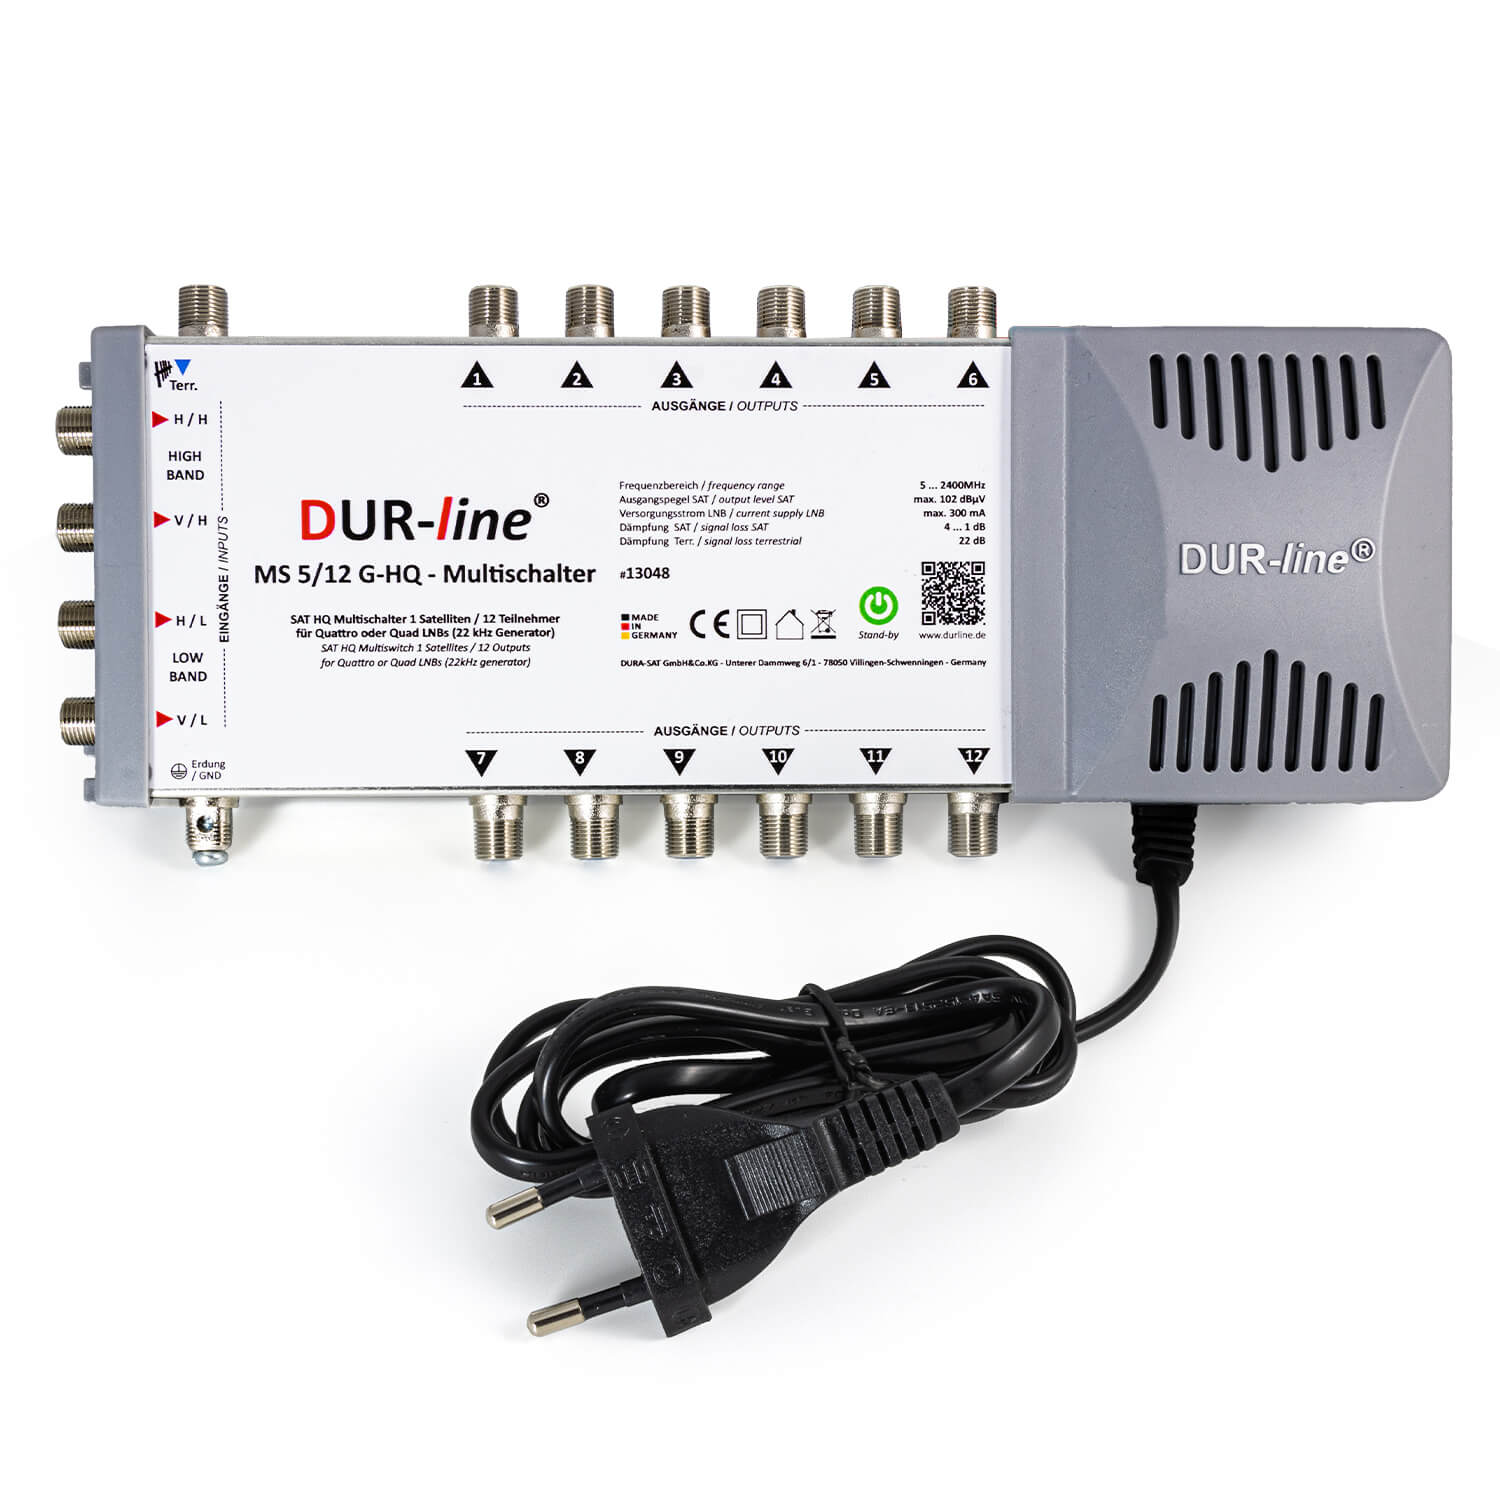 Dur-line 5-12 MS Multischalter